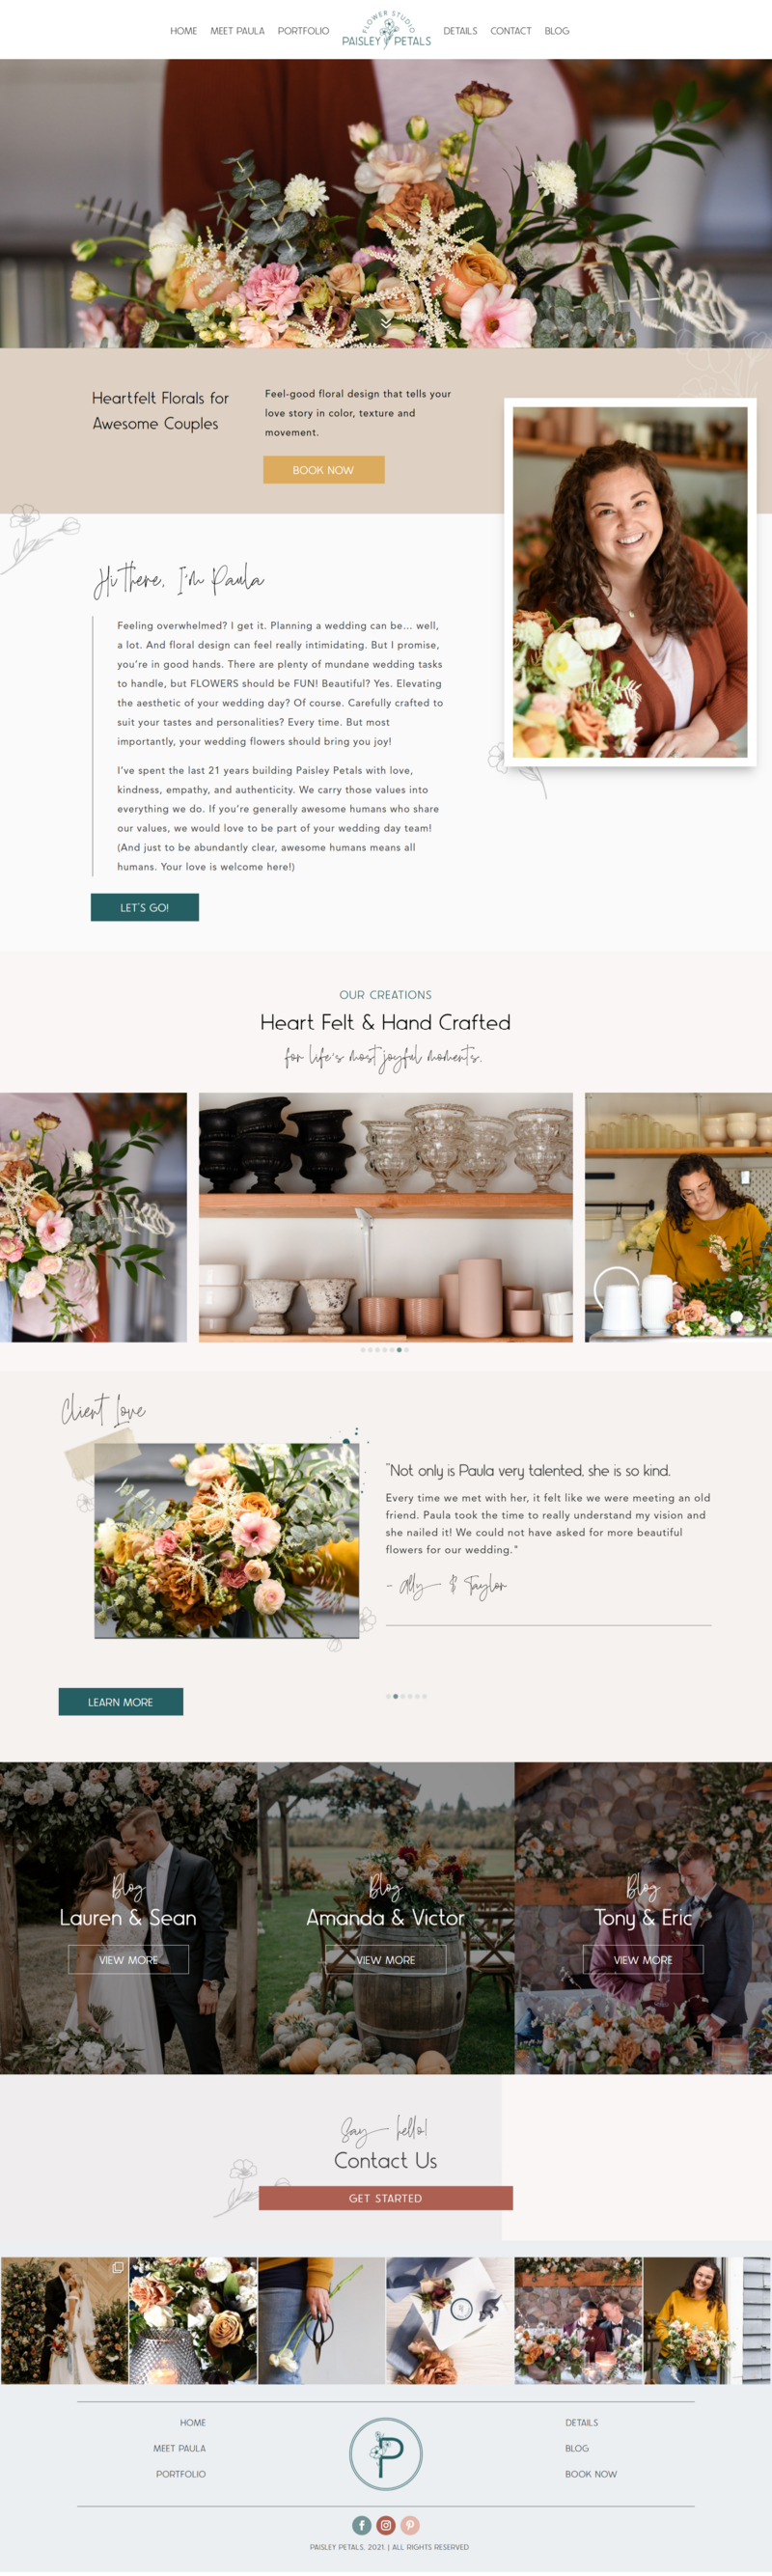 Paisley Petals Home Page